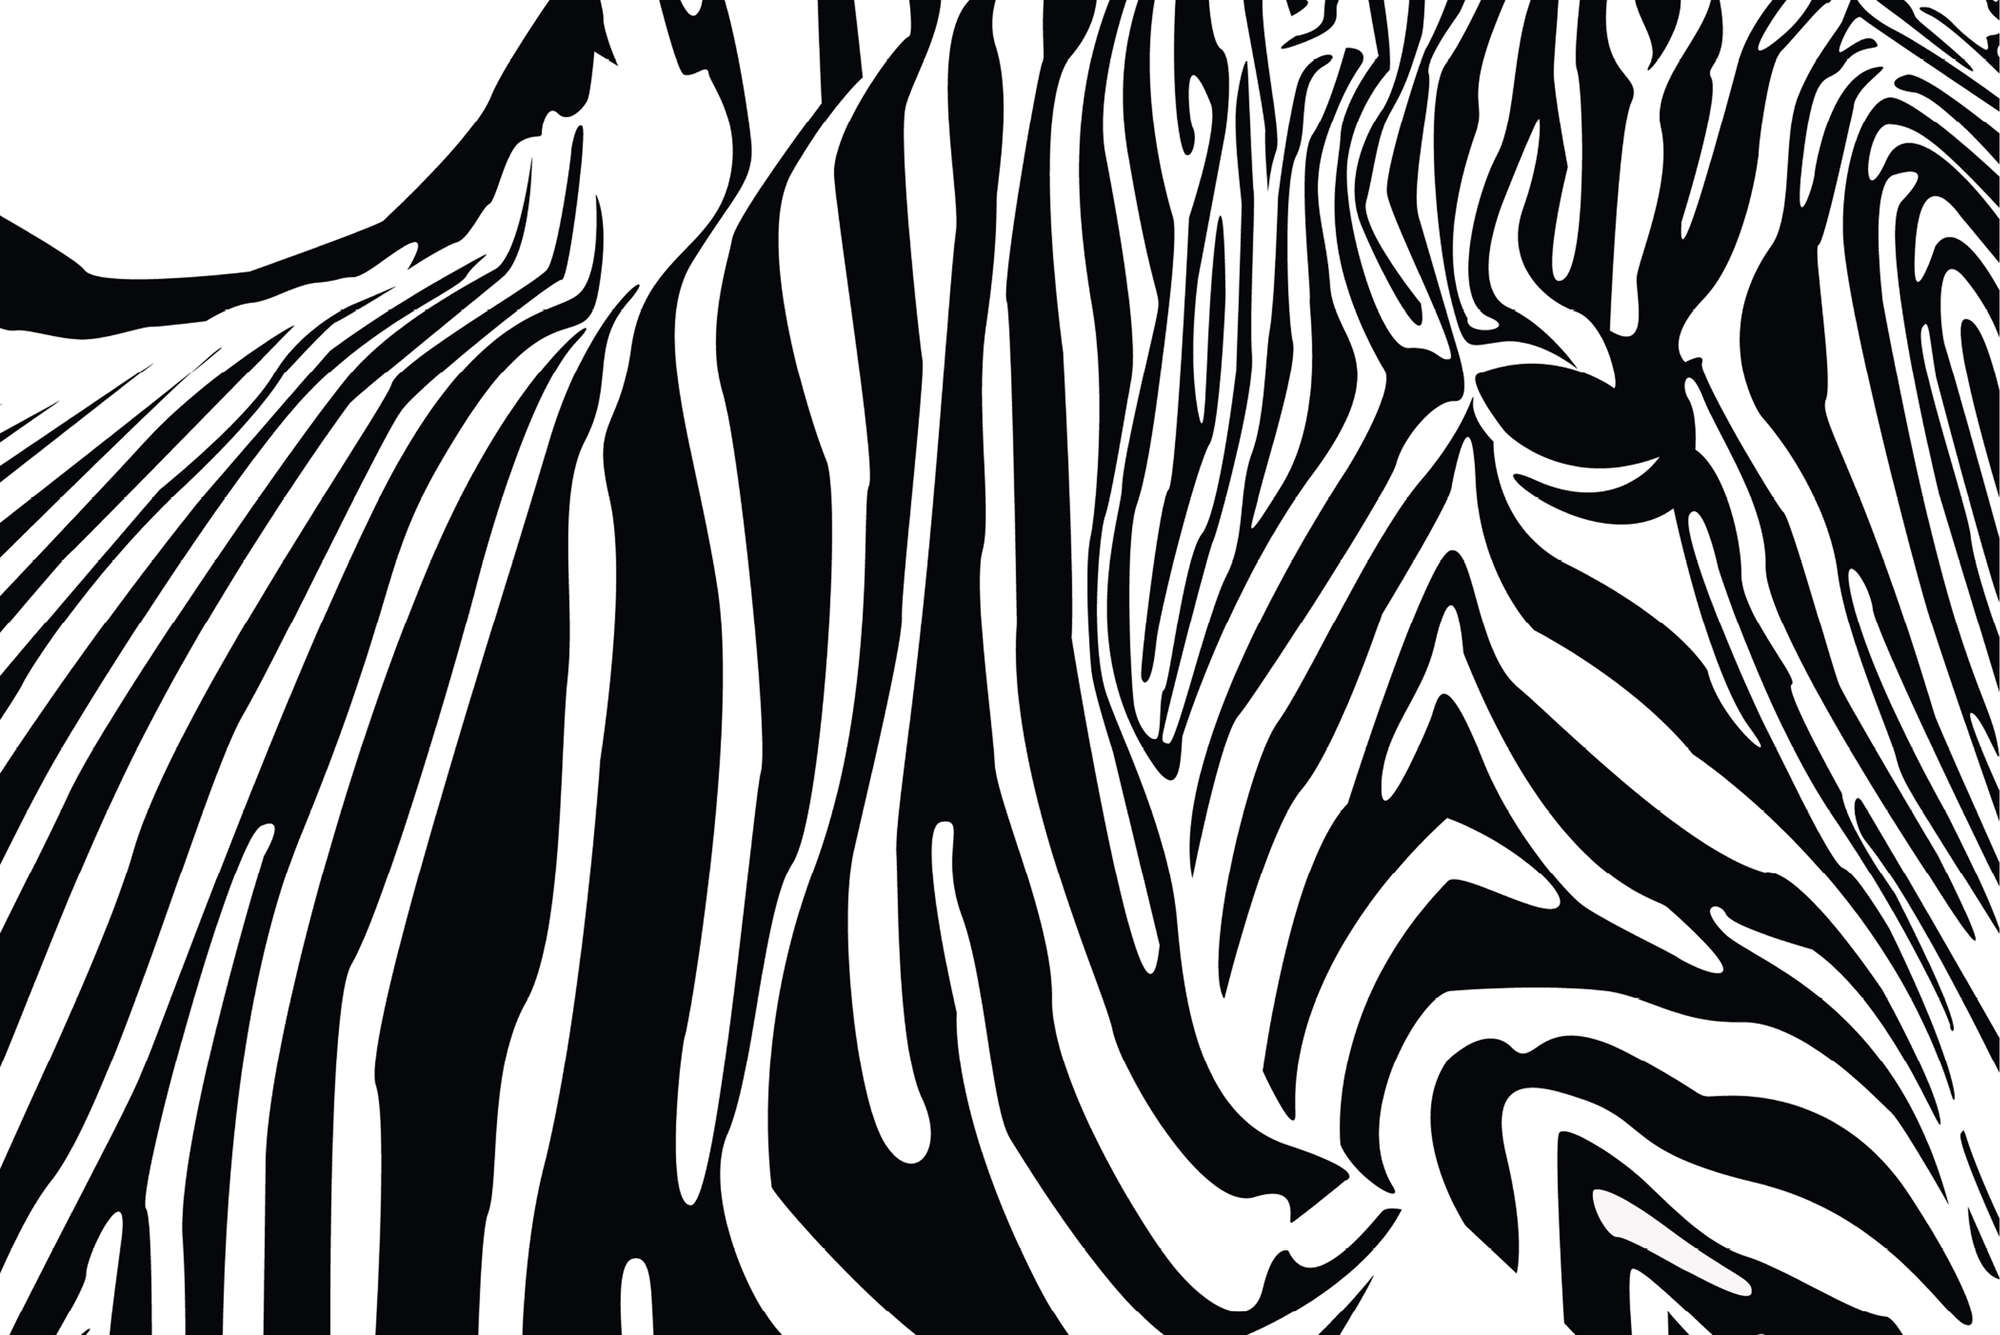             Fototapete mit Zebra Muster – Mattes Glattvlies
        